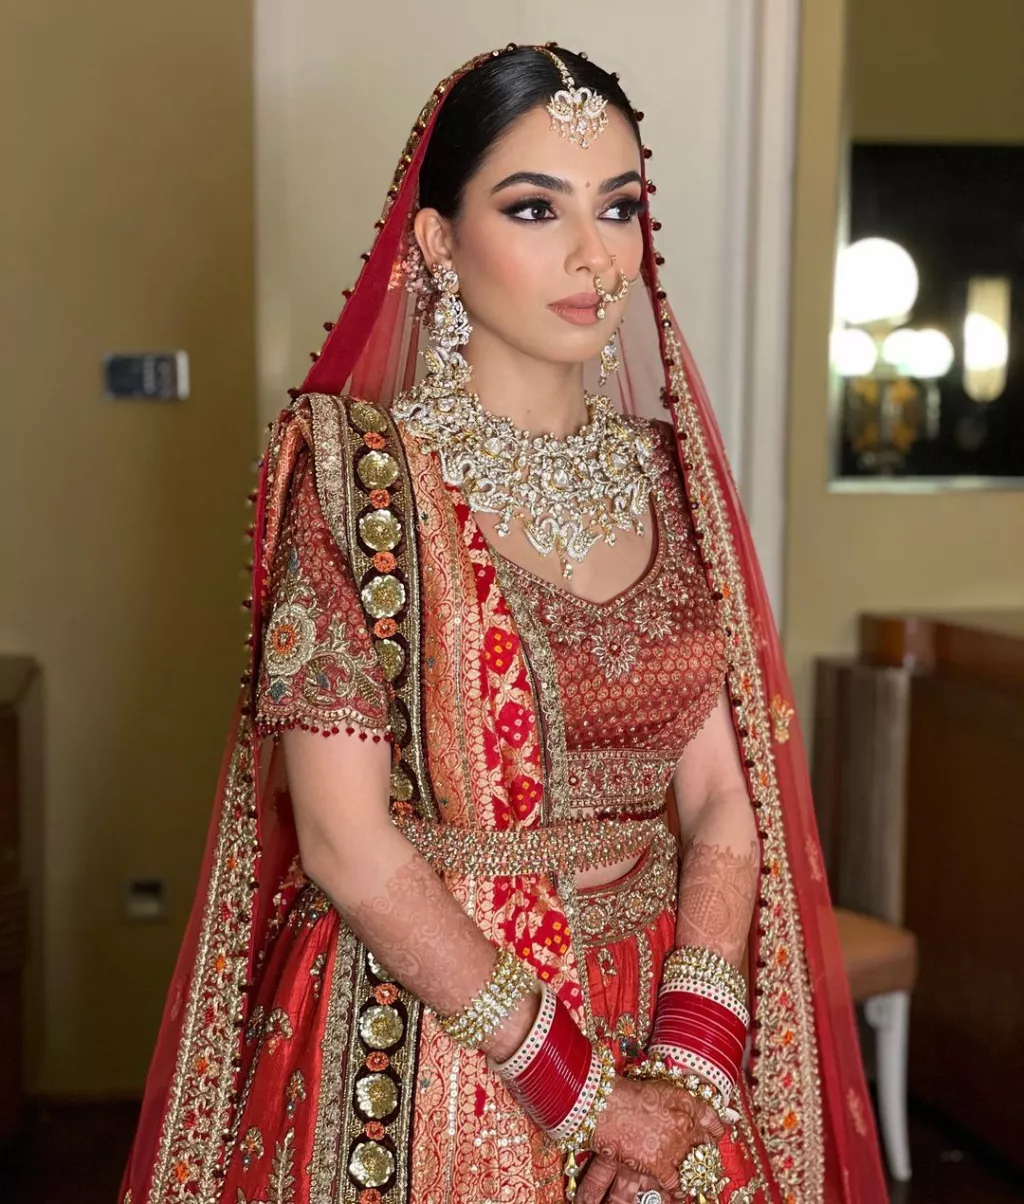 Tarun Tahiliani Bride Stunned In A Cherry Red Lehenga With Gold Threads ...